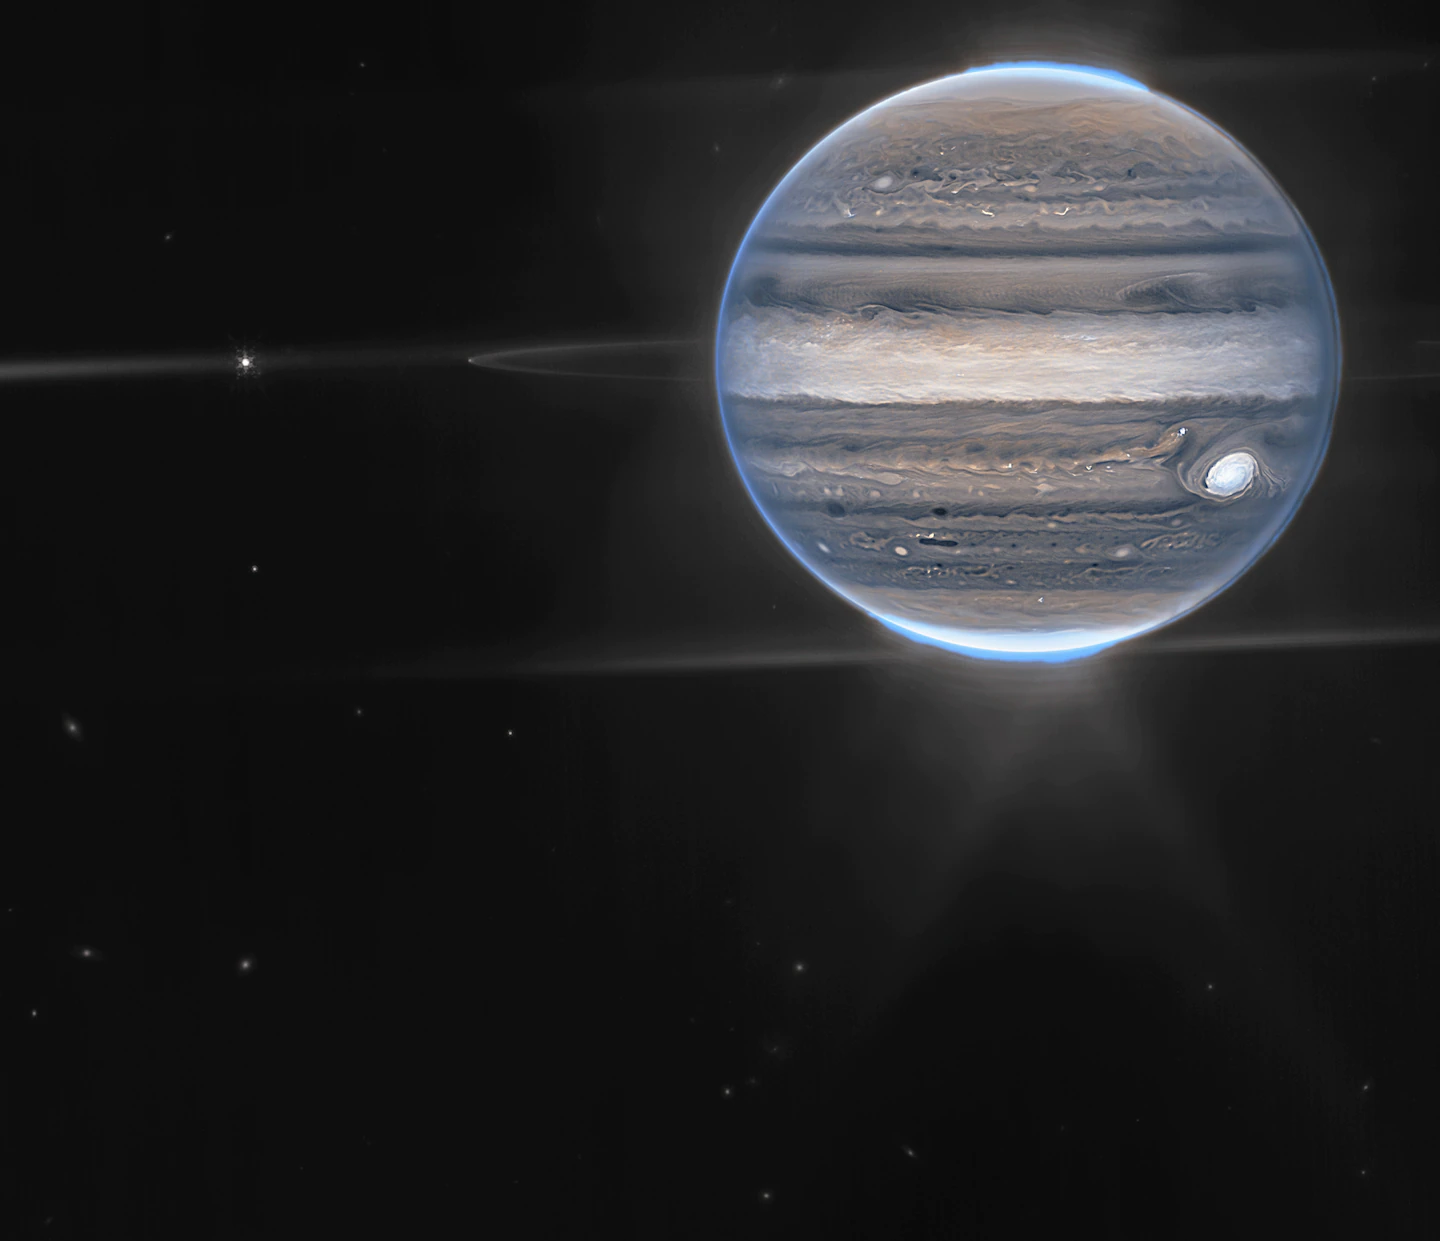 Stunning images of Jupiter shown by NASA’s James Webb Telescope